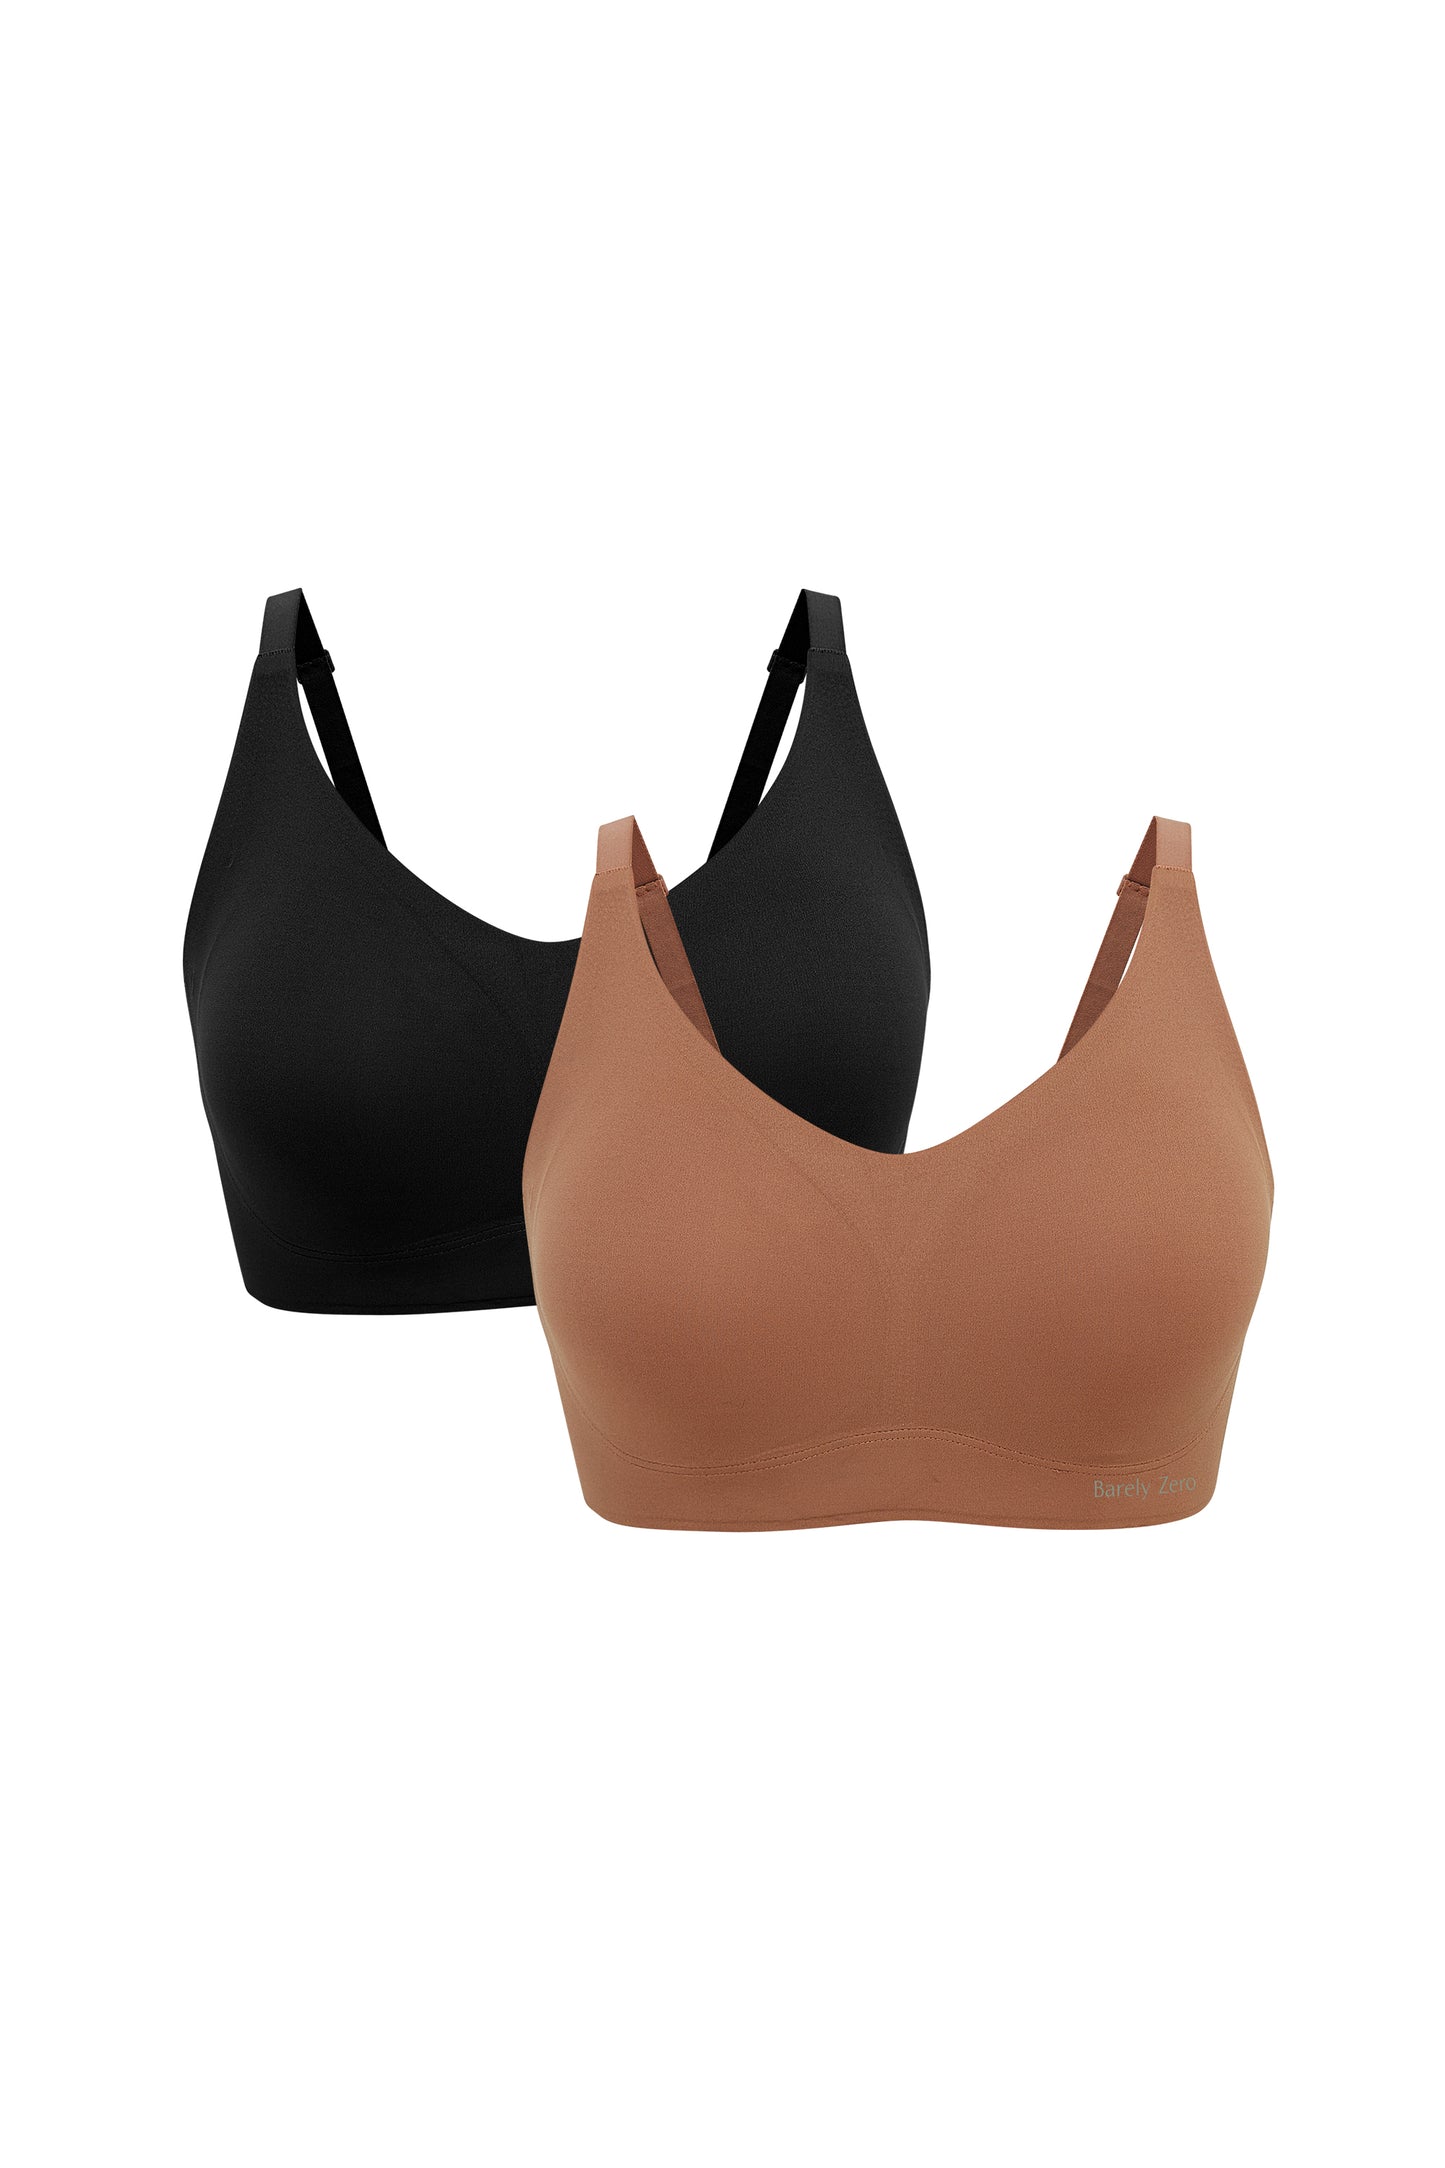 black bra and brick color bra